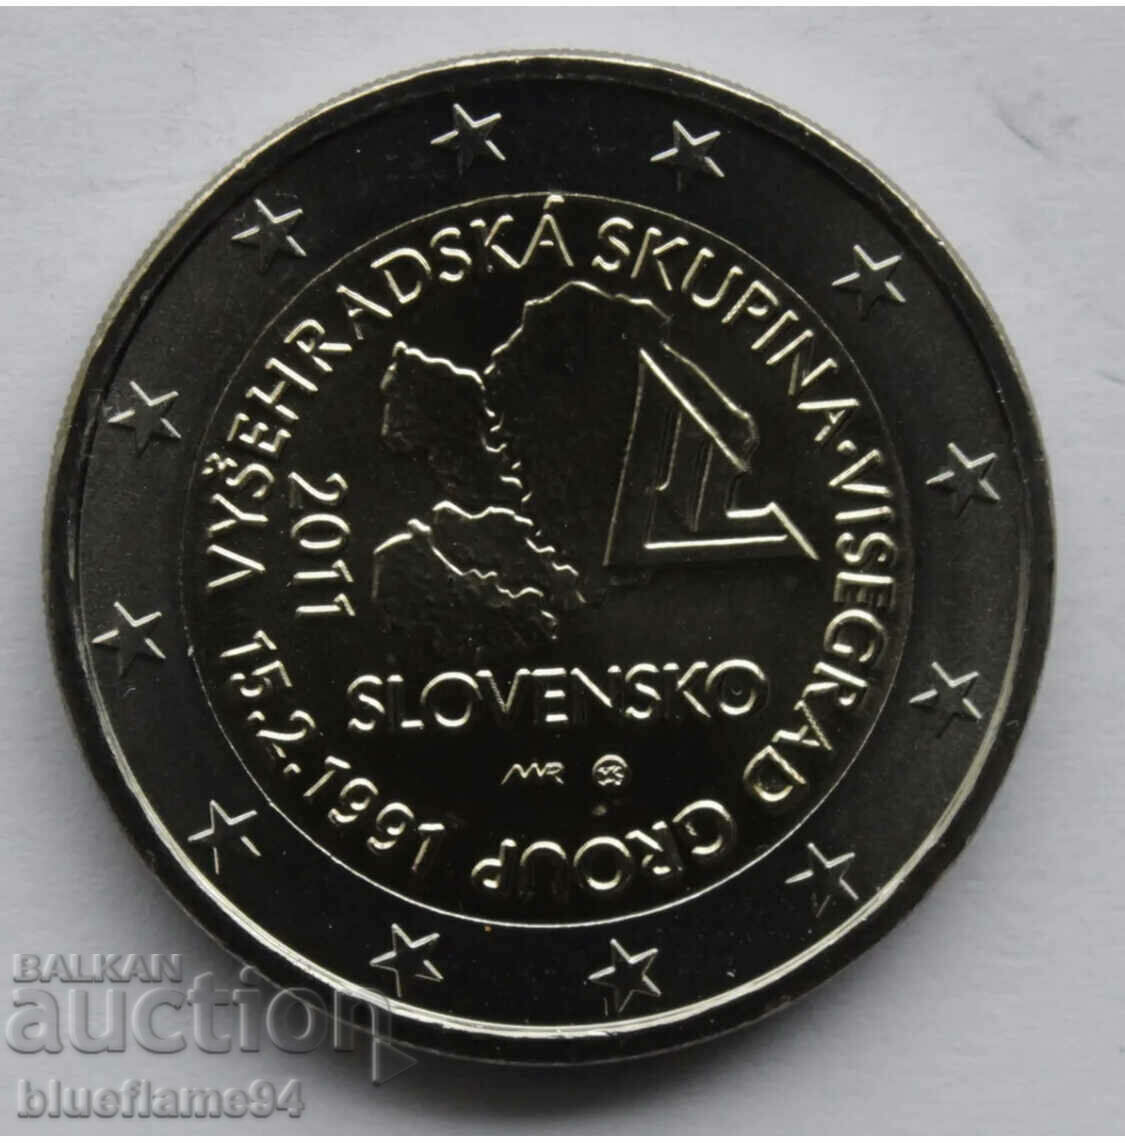 2 euro Slovacia 2011